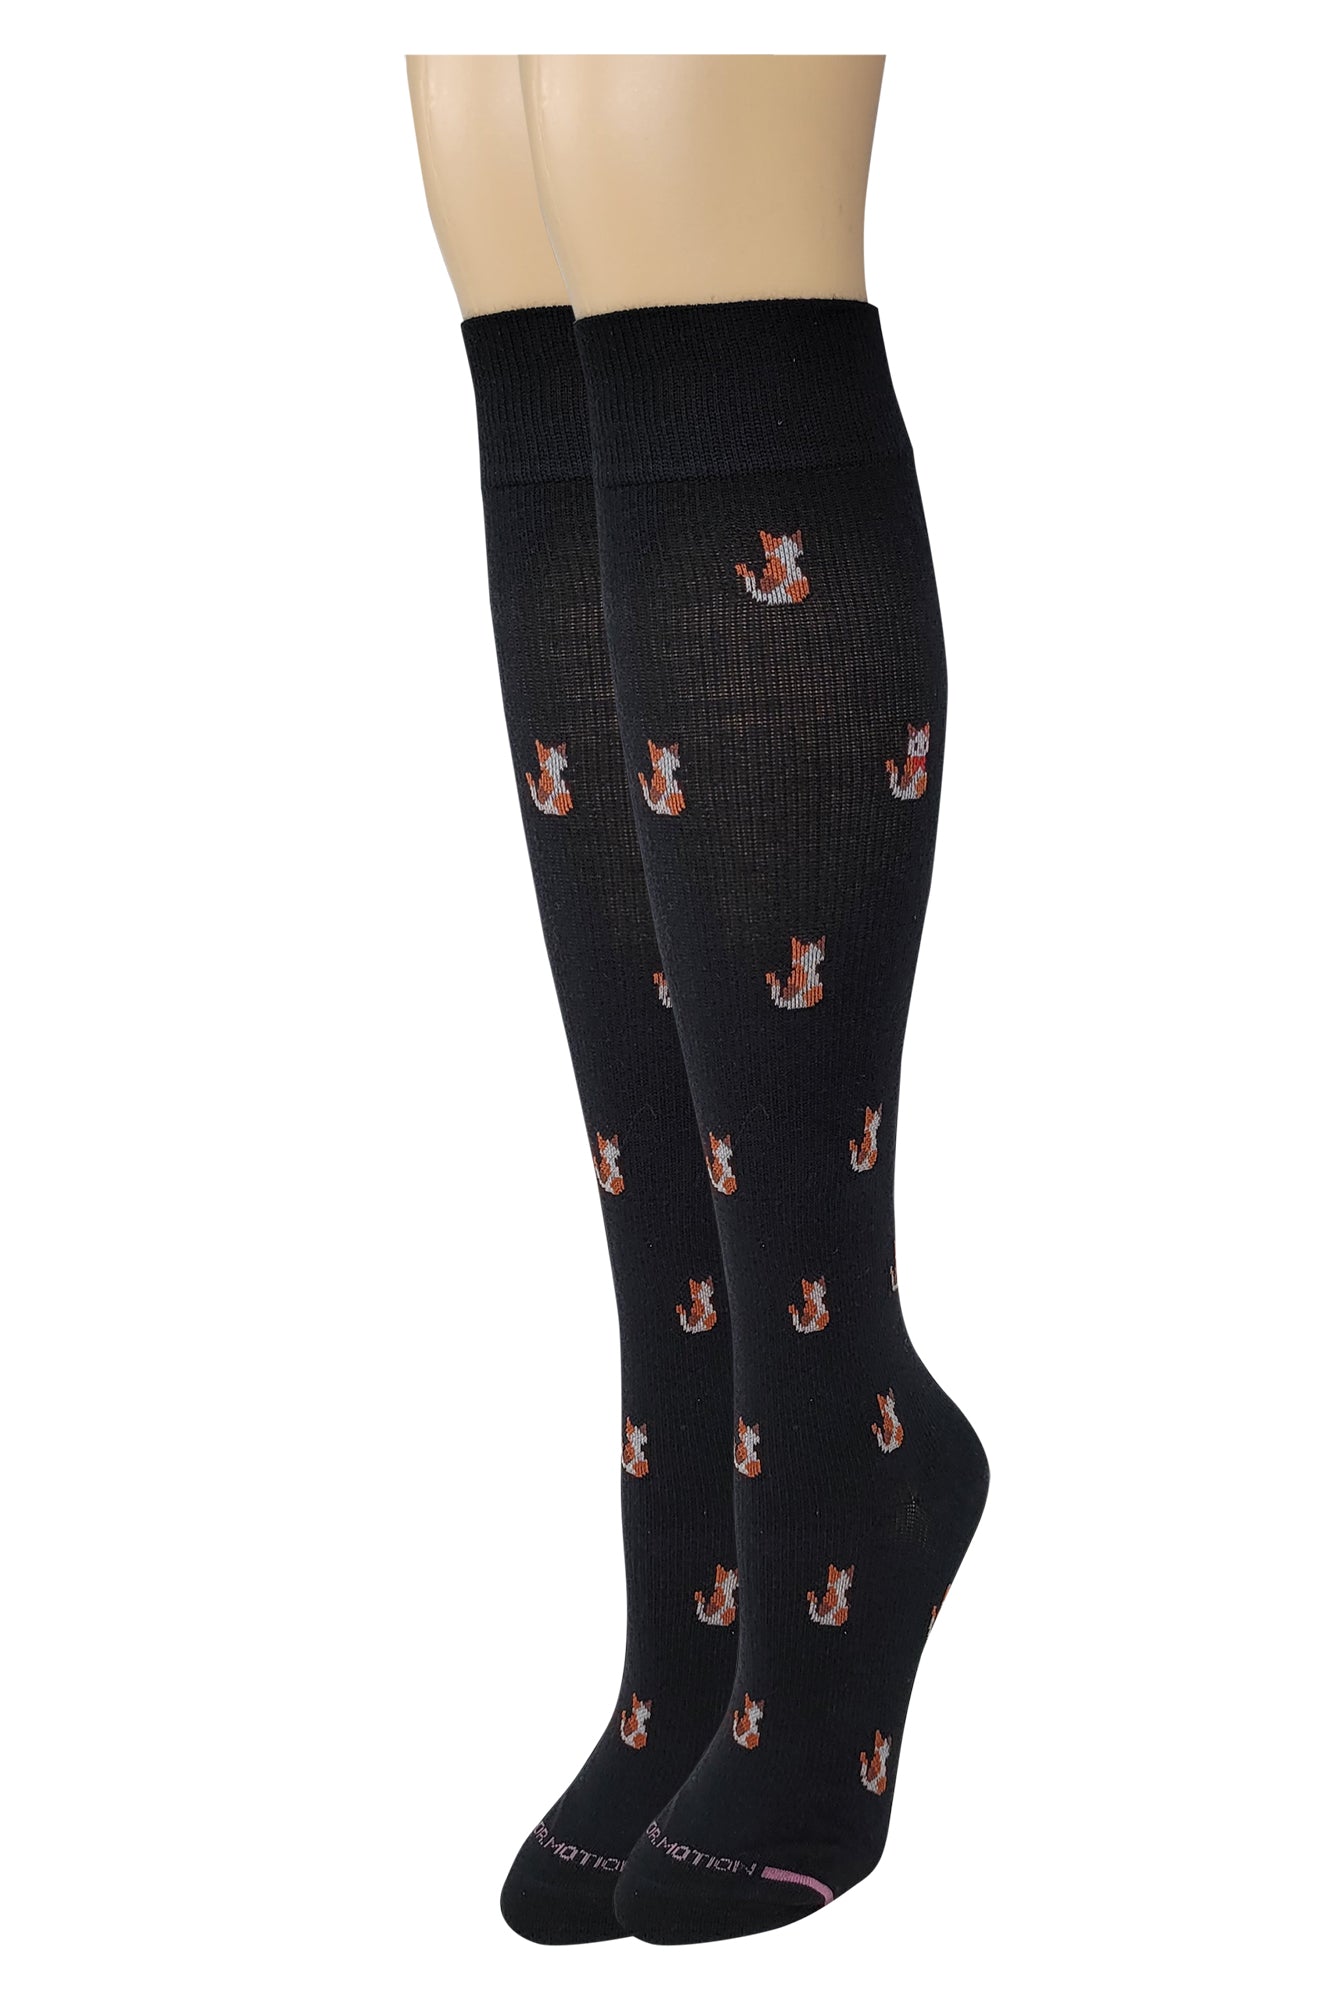 Knee High Compression Socks | Cute Cat Design | Women's (1 Pair)